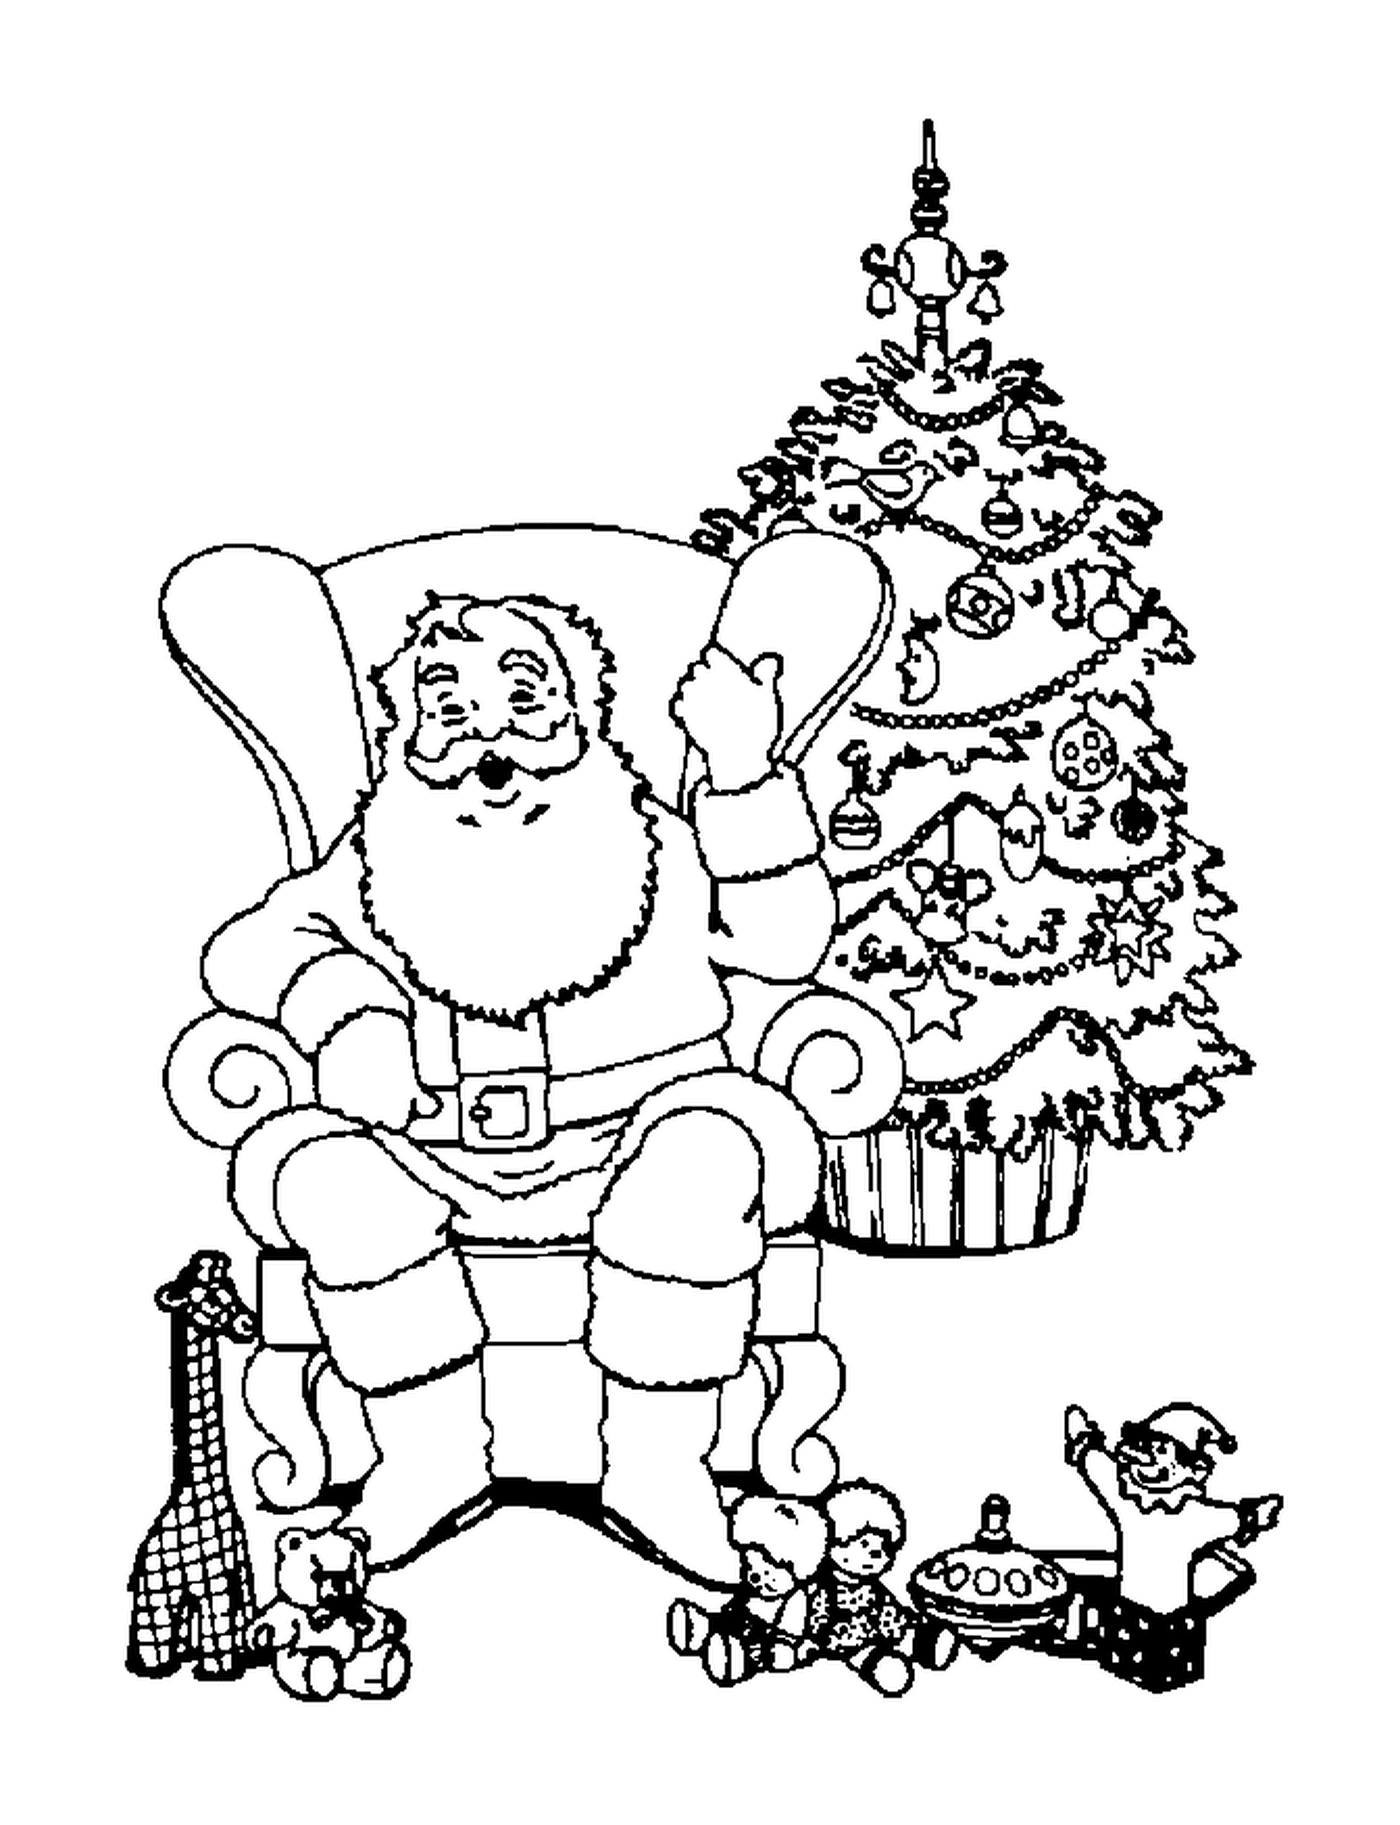  а Санта сидит на стуле у рождественской ёлки 